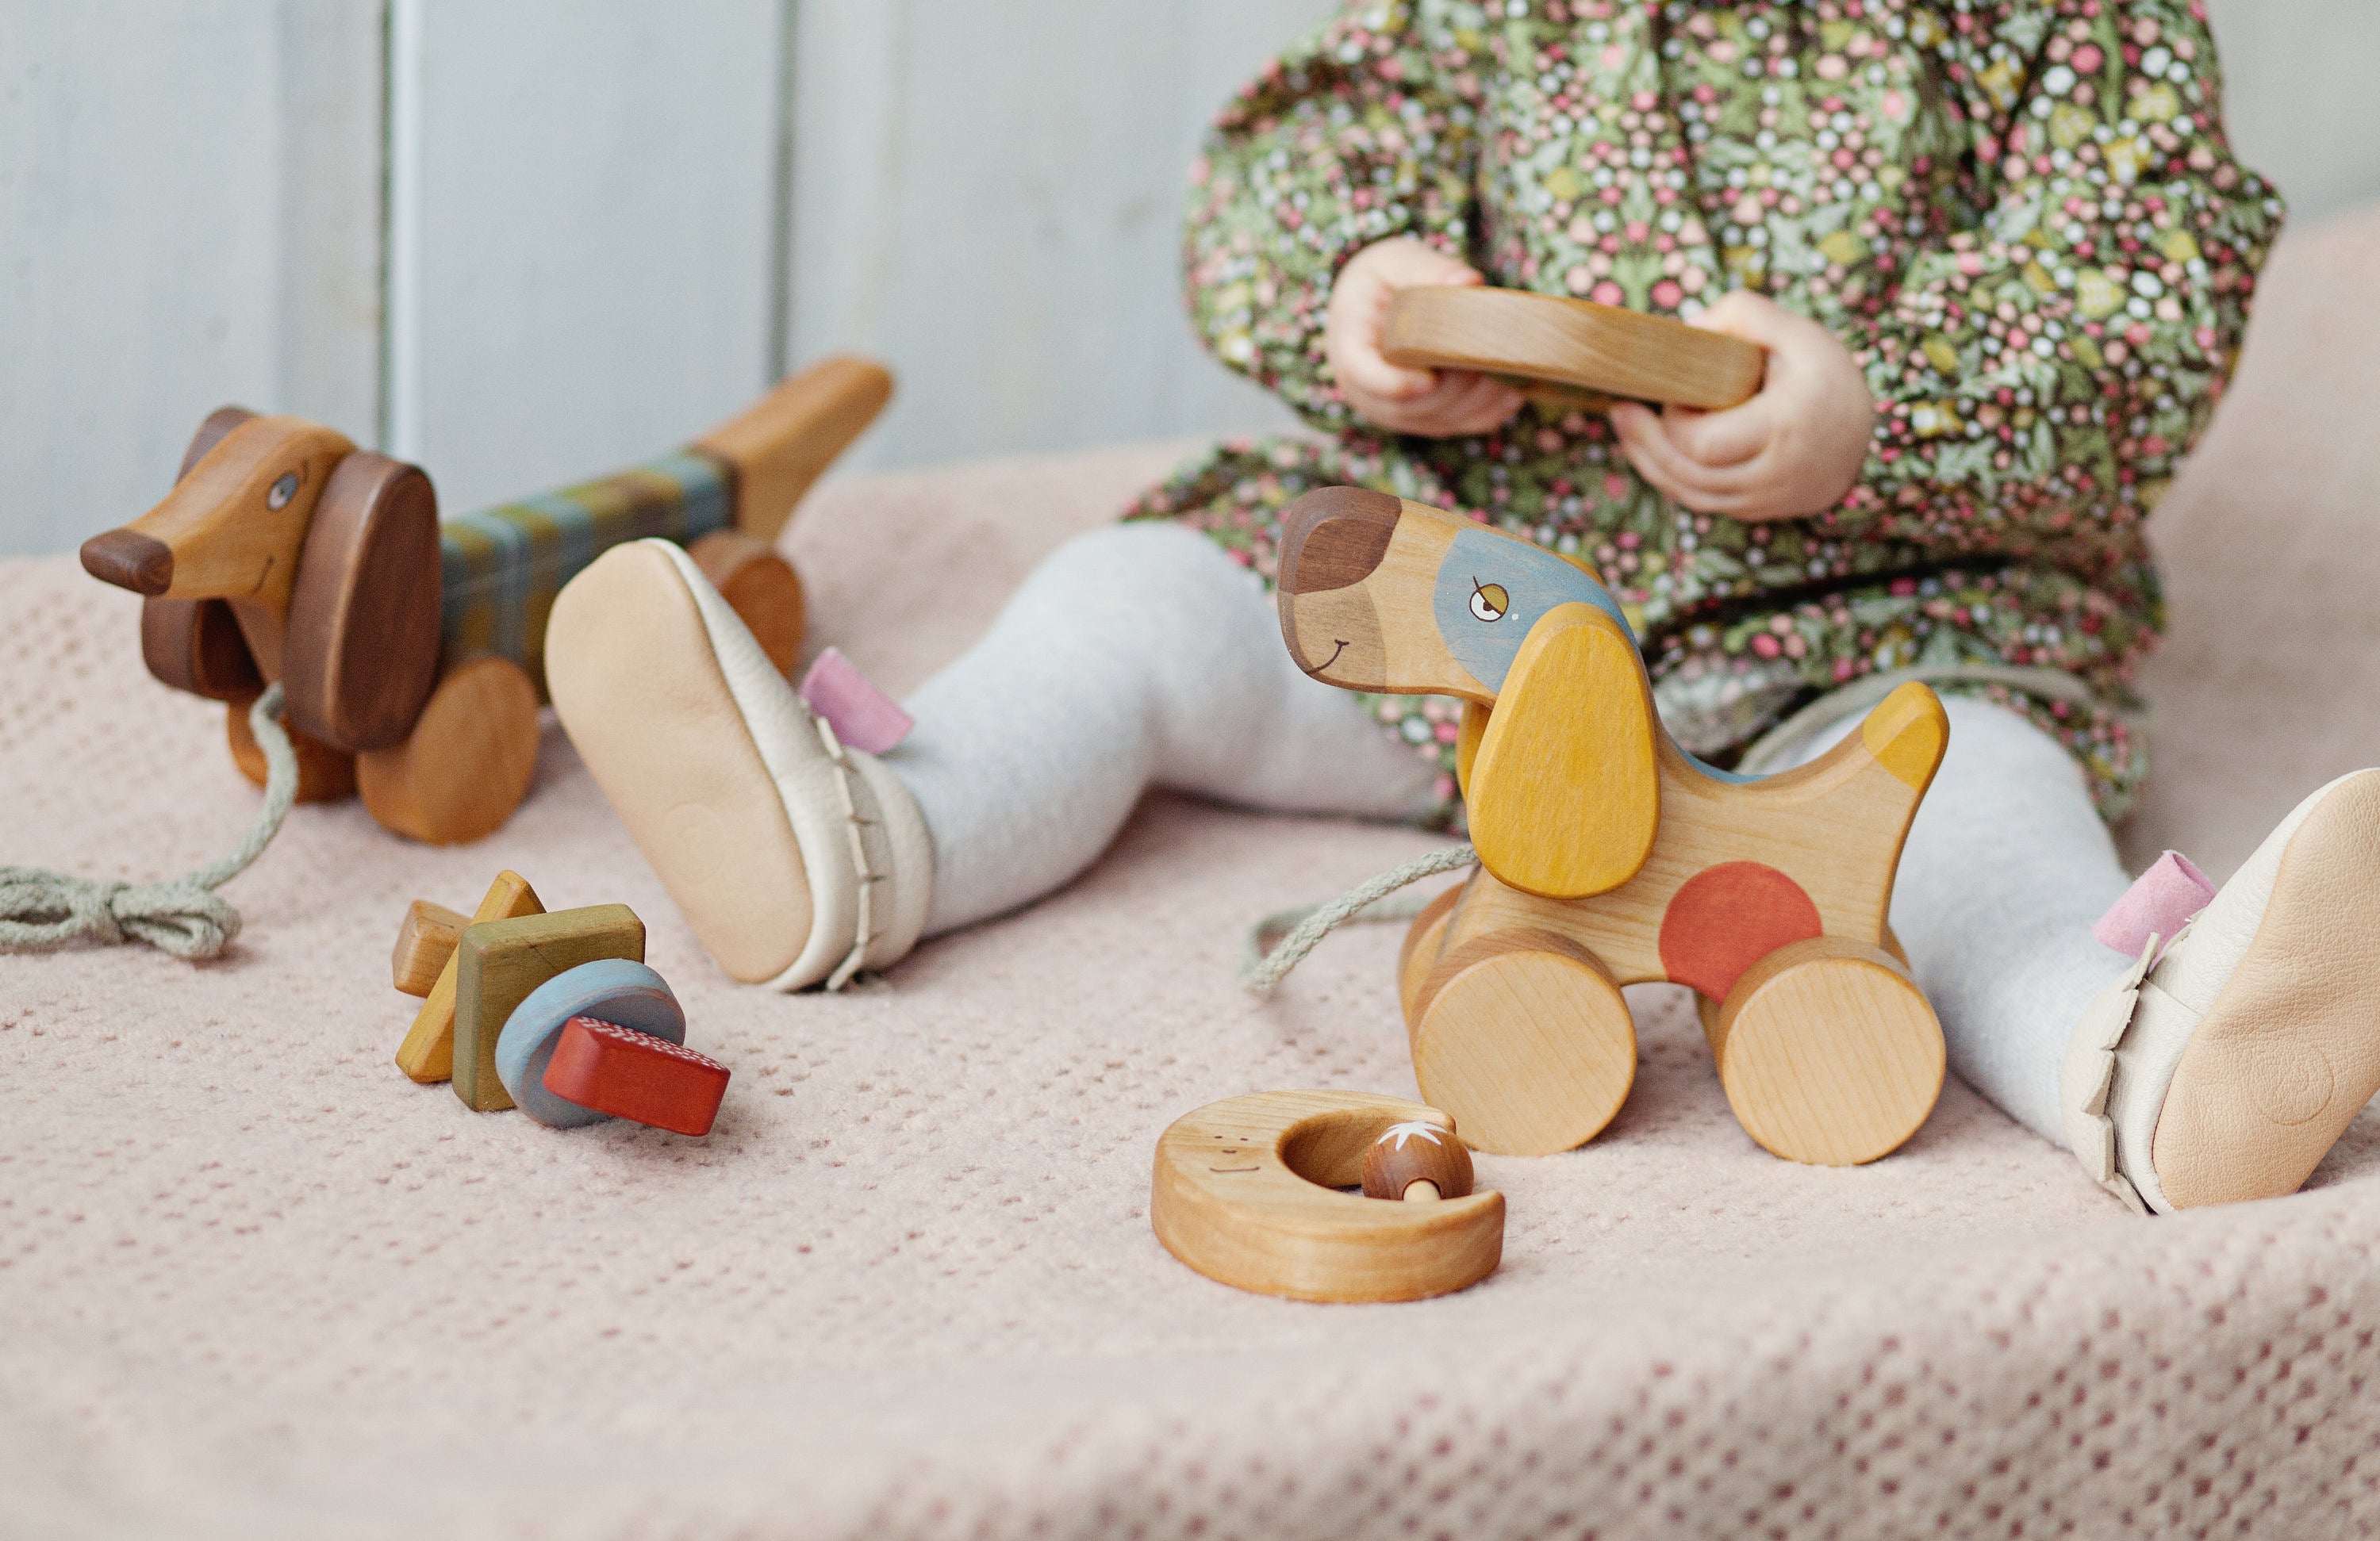 Top 5 Educational Toys in Dubai: Enhancing Learning Through Play